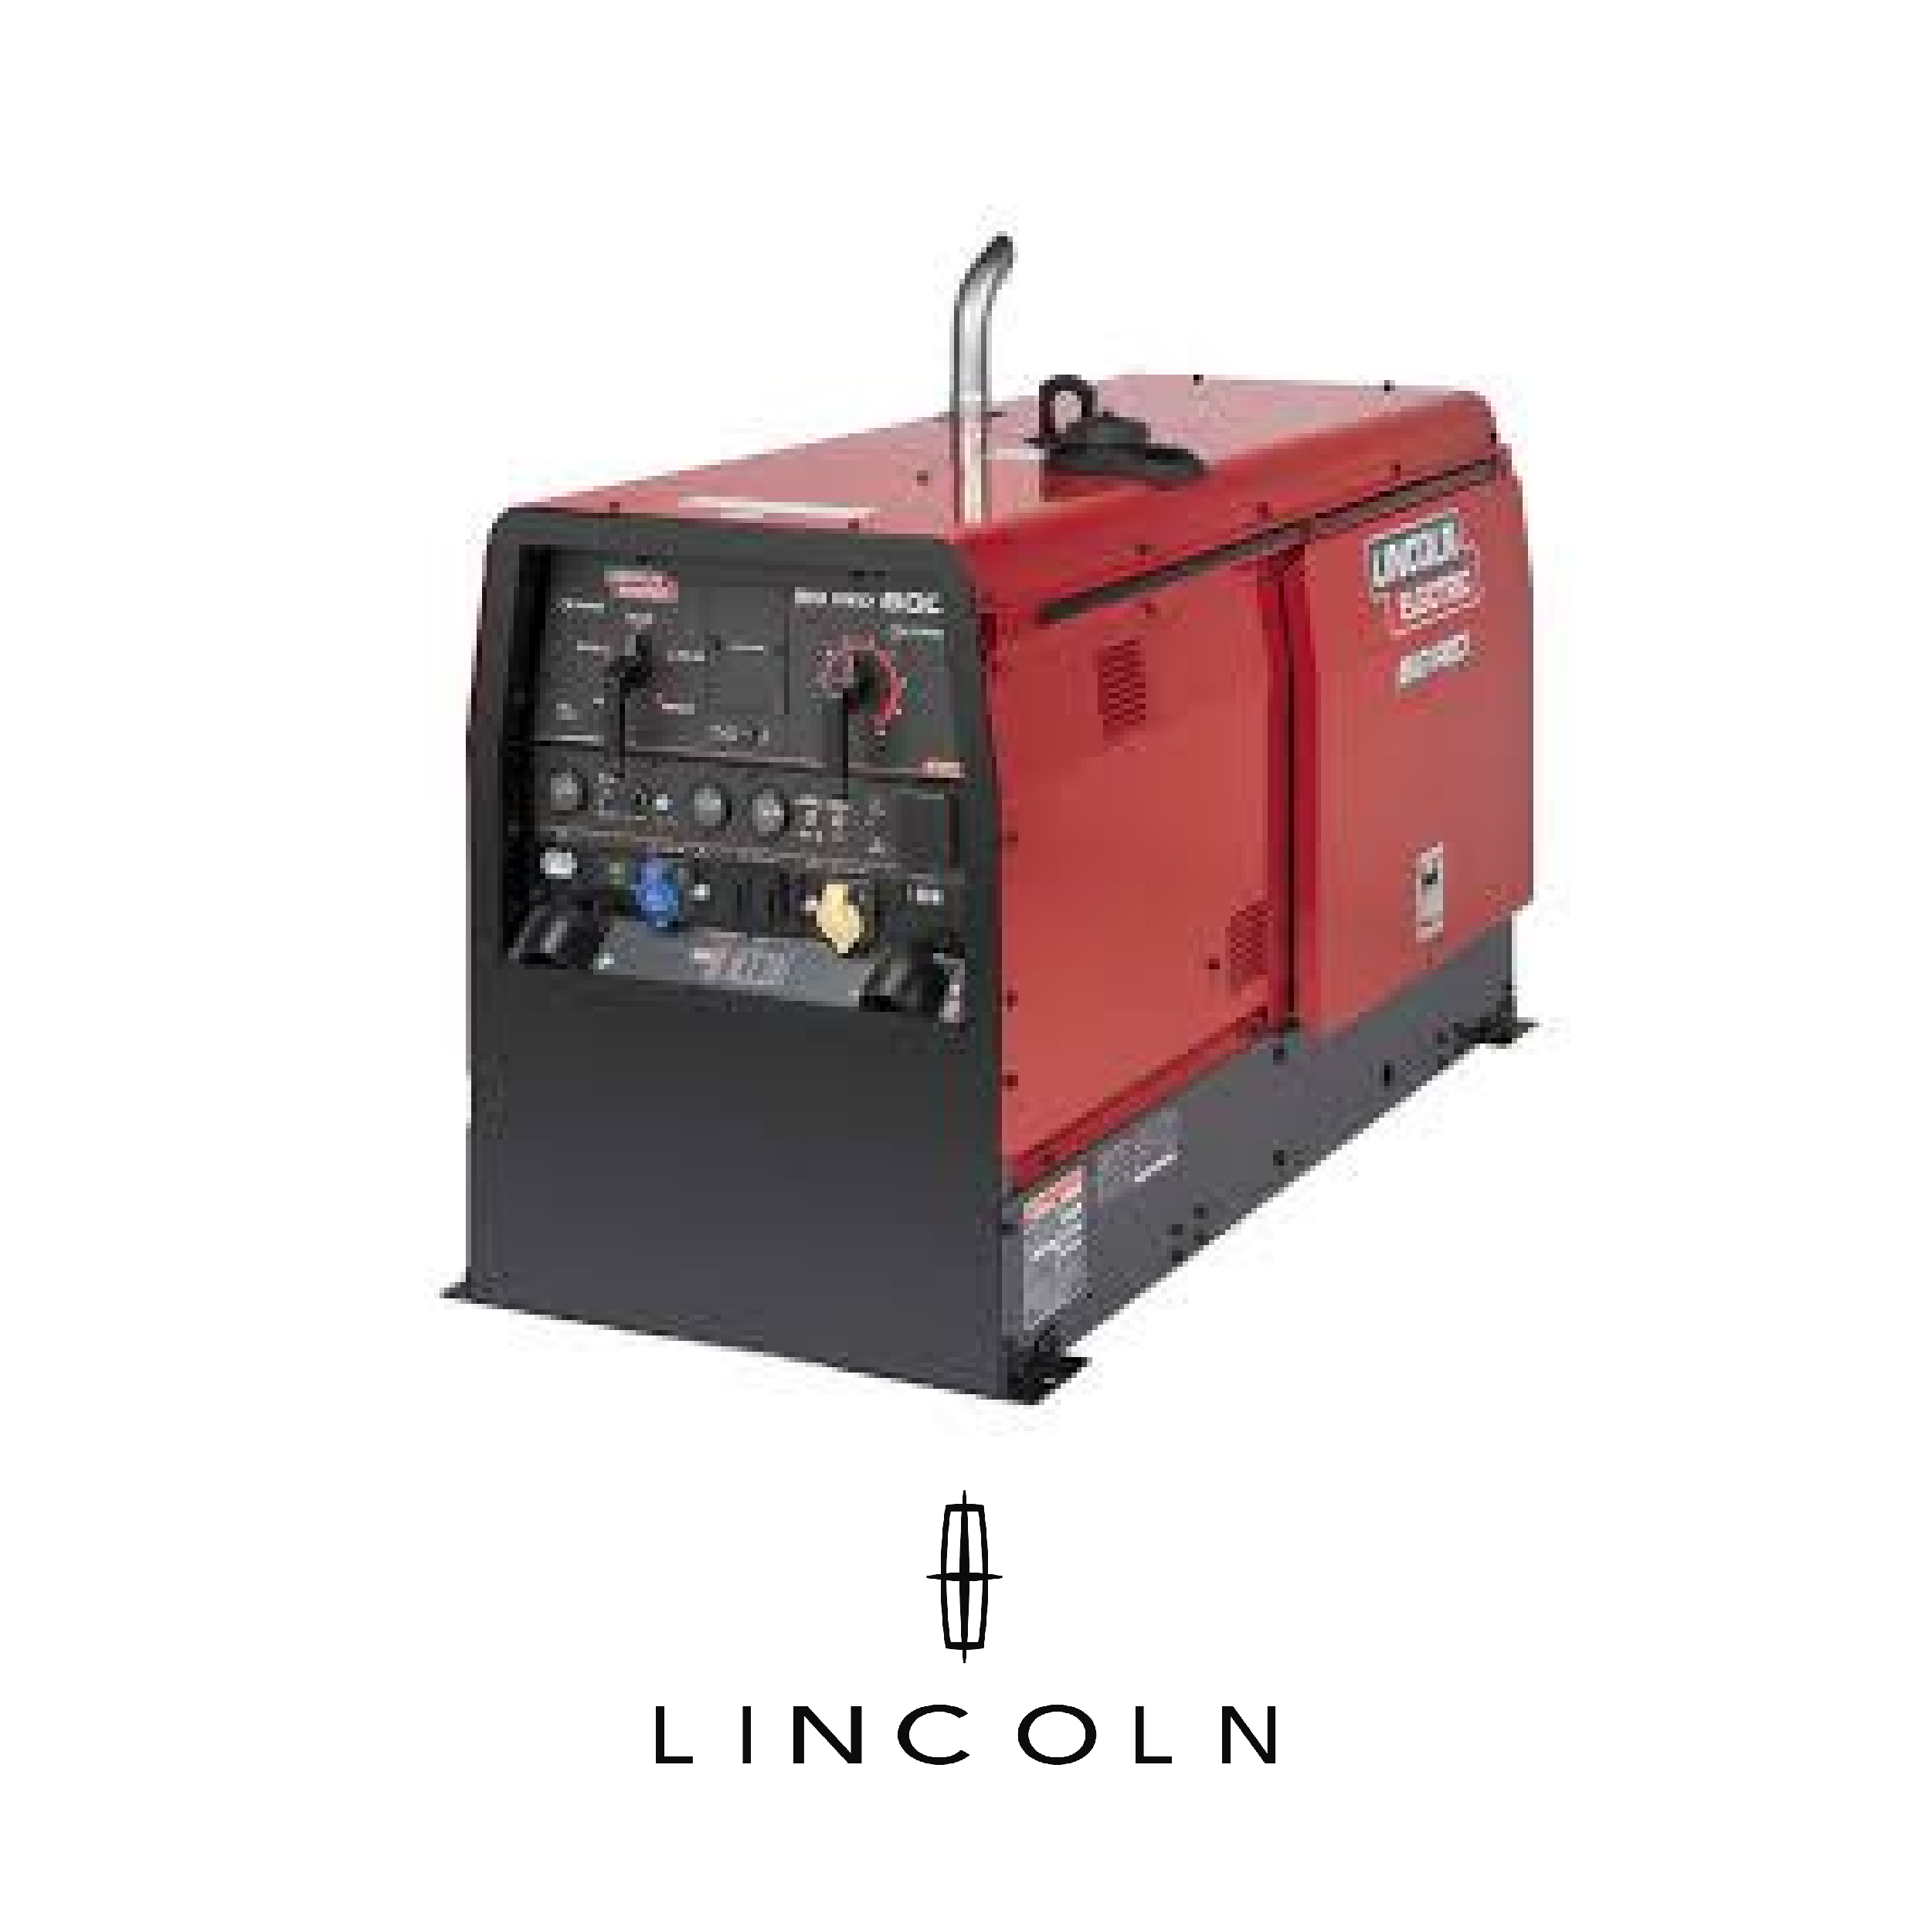 Lincoln-Welding-Machine.jpg